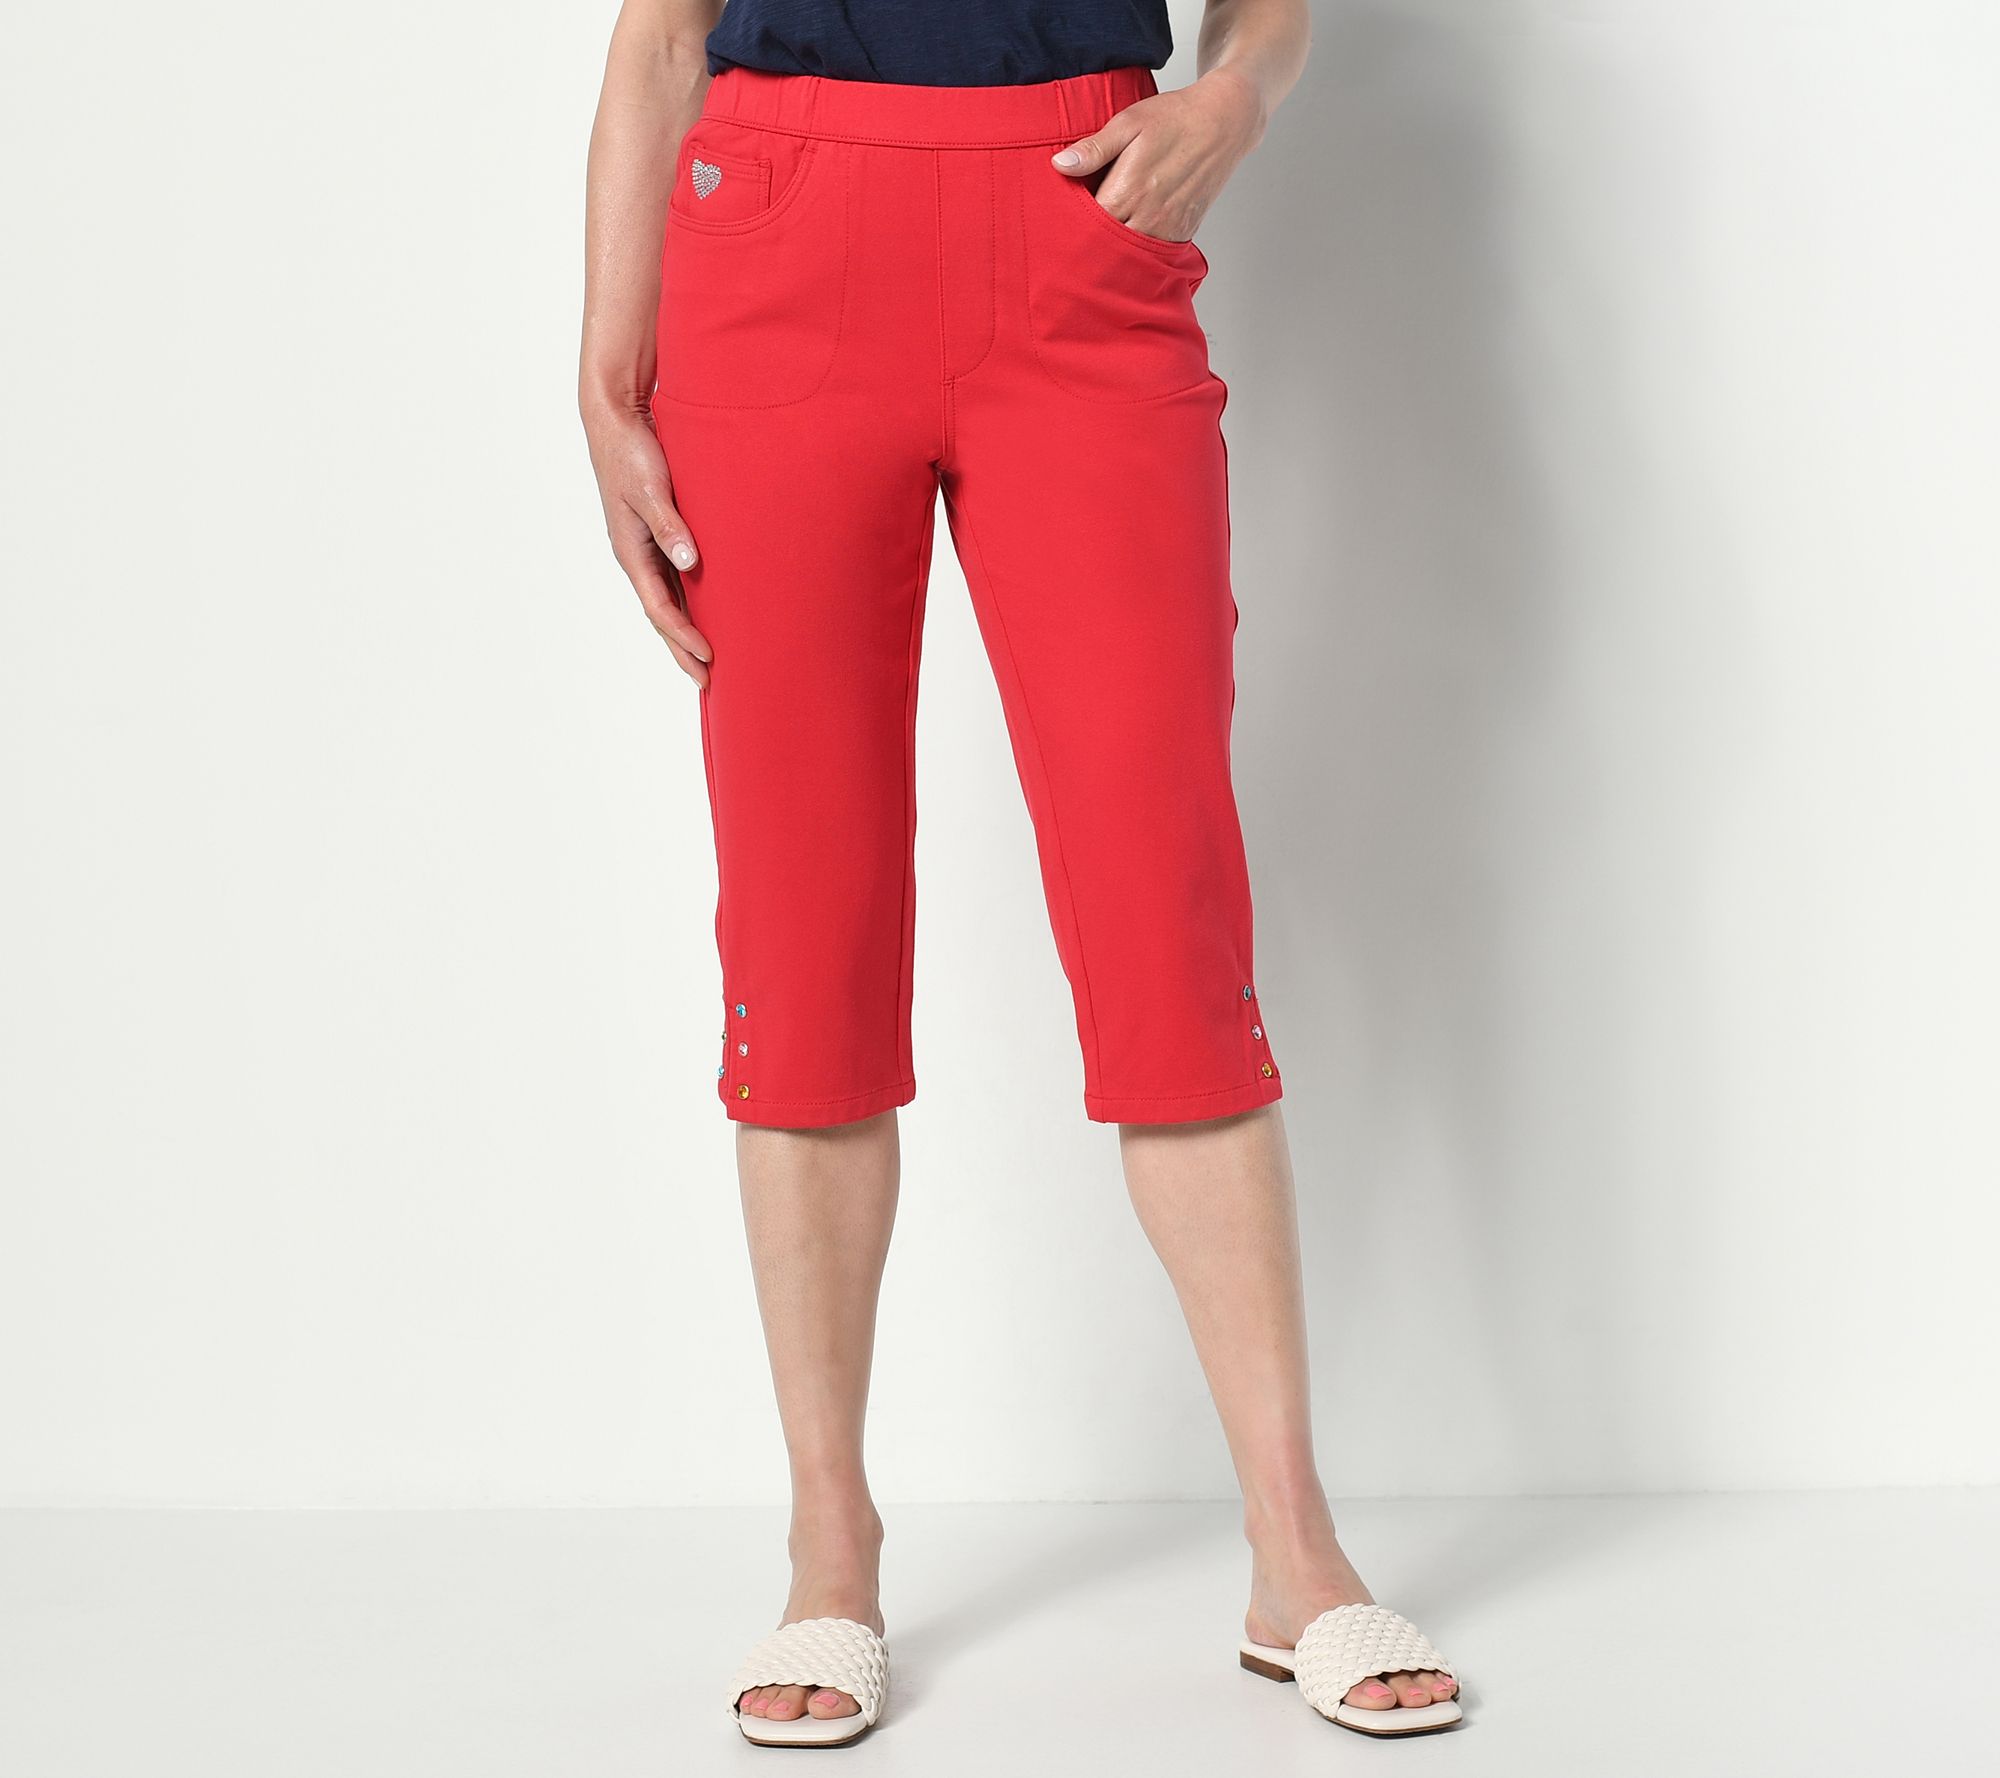 Quacker Factory Dream Jeans Pull On Stretch Capri Pants Size XL